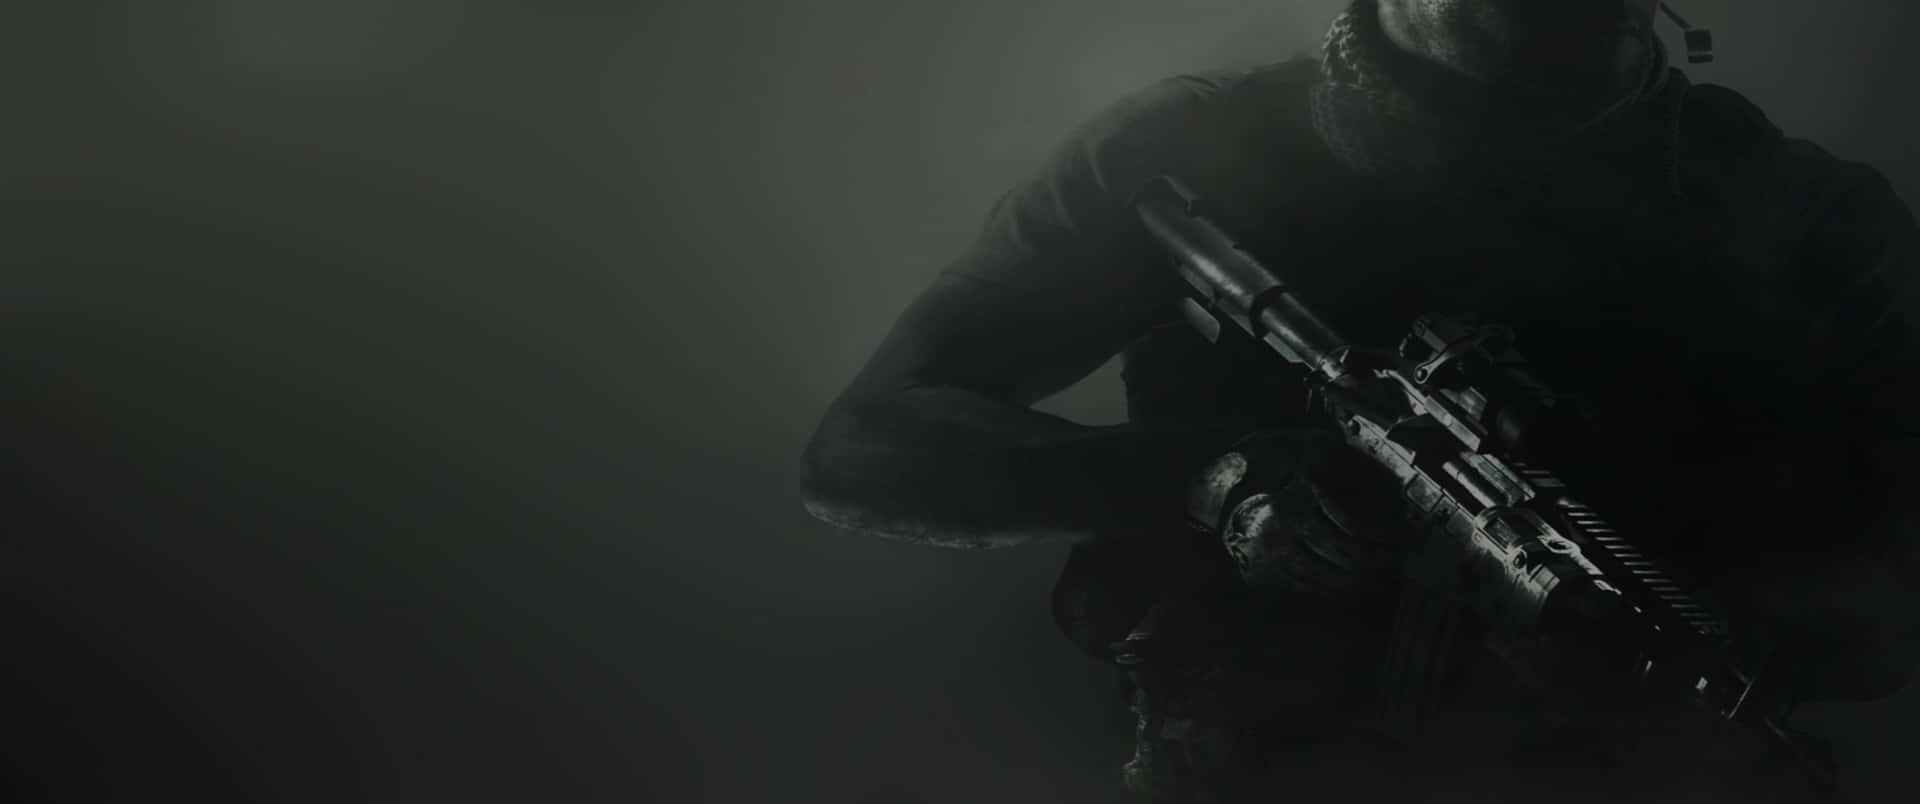 Svartbakgrund 3440x1440p Call Of Duty Modern Warfare Bakgrund.